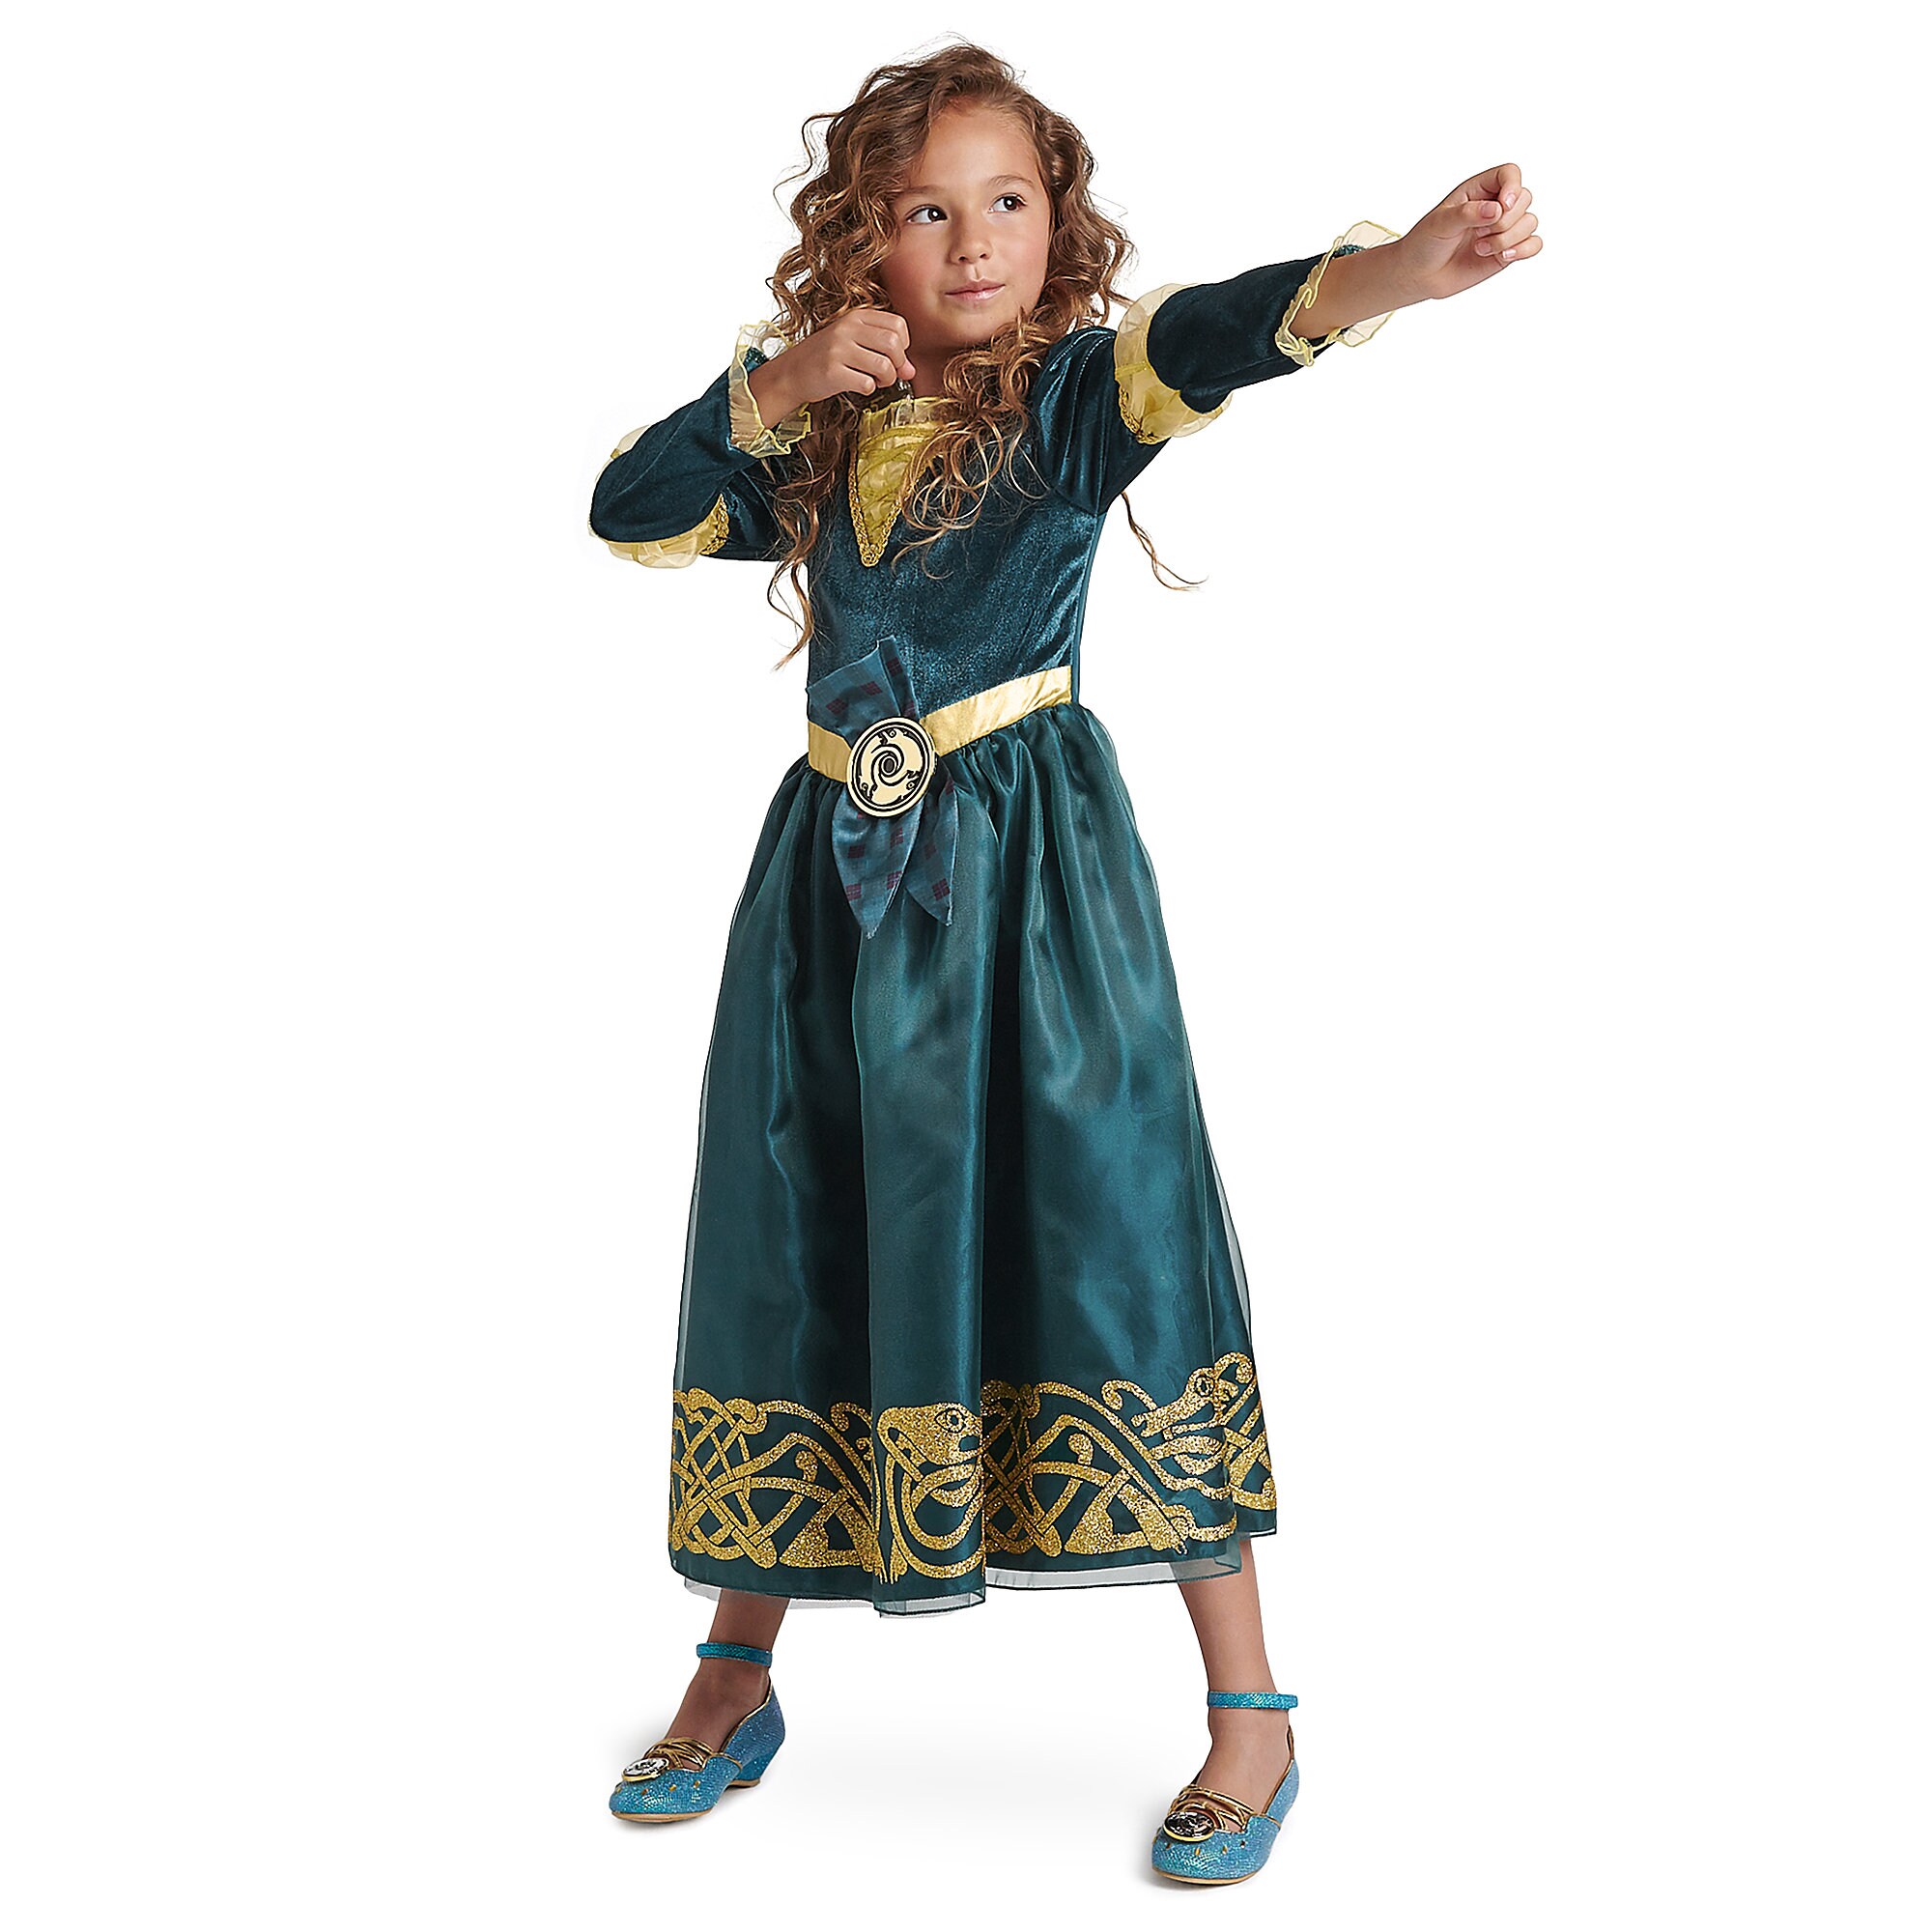 Merida Costume for Kids - Brave